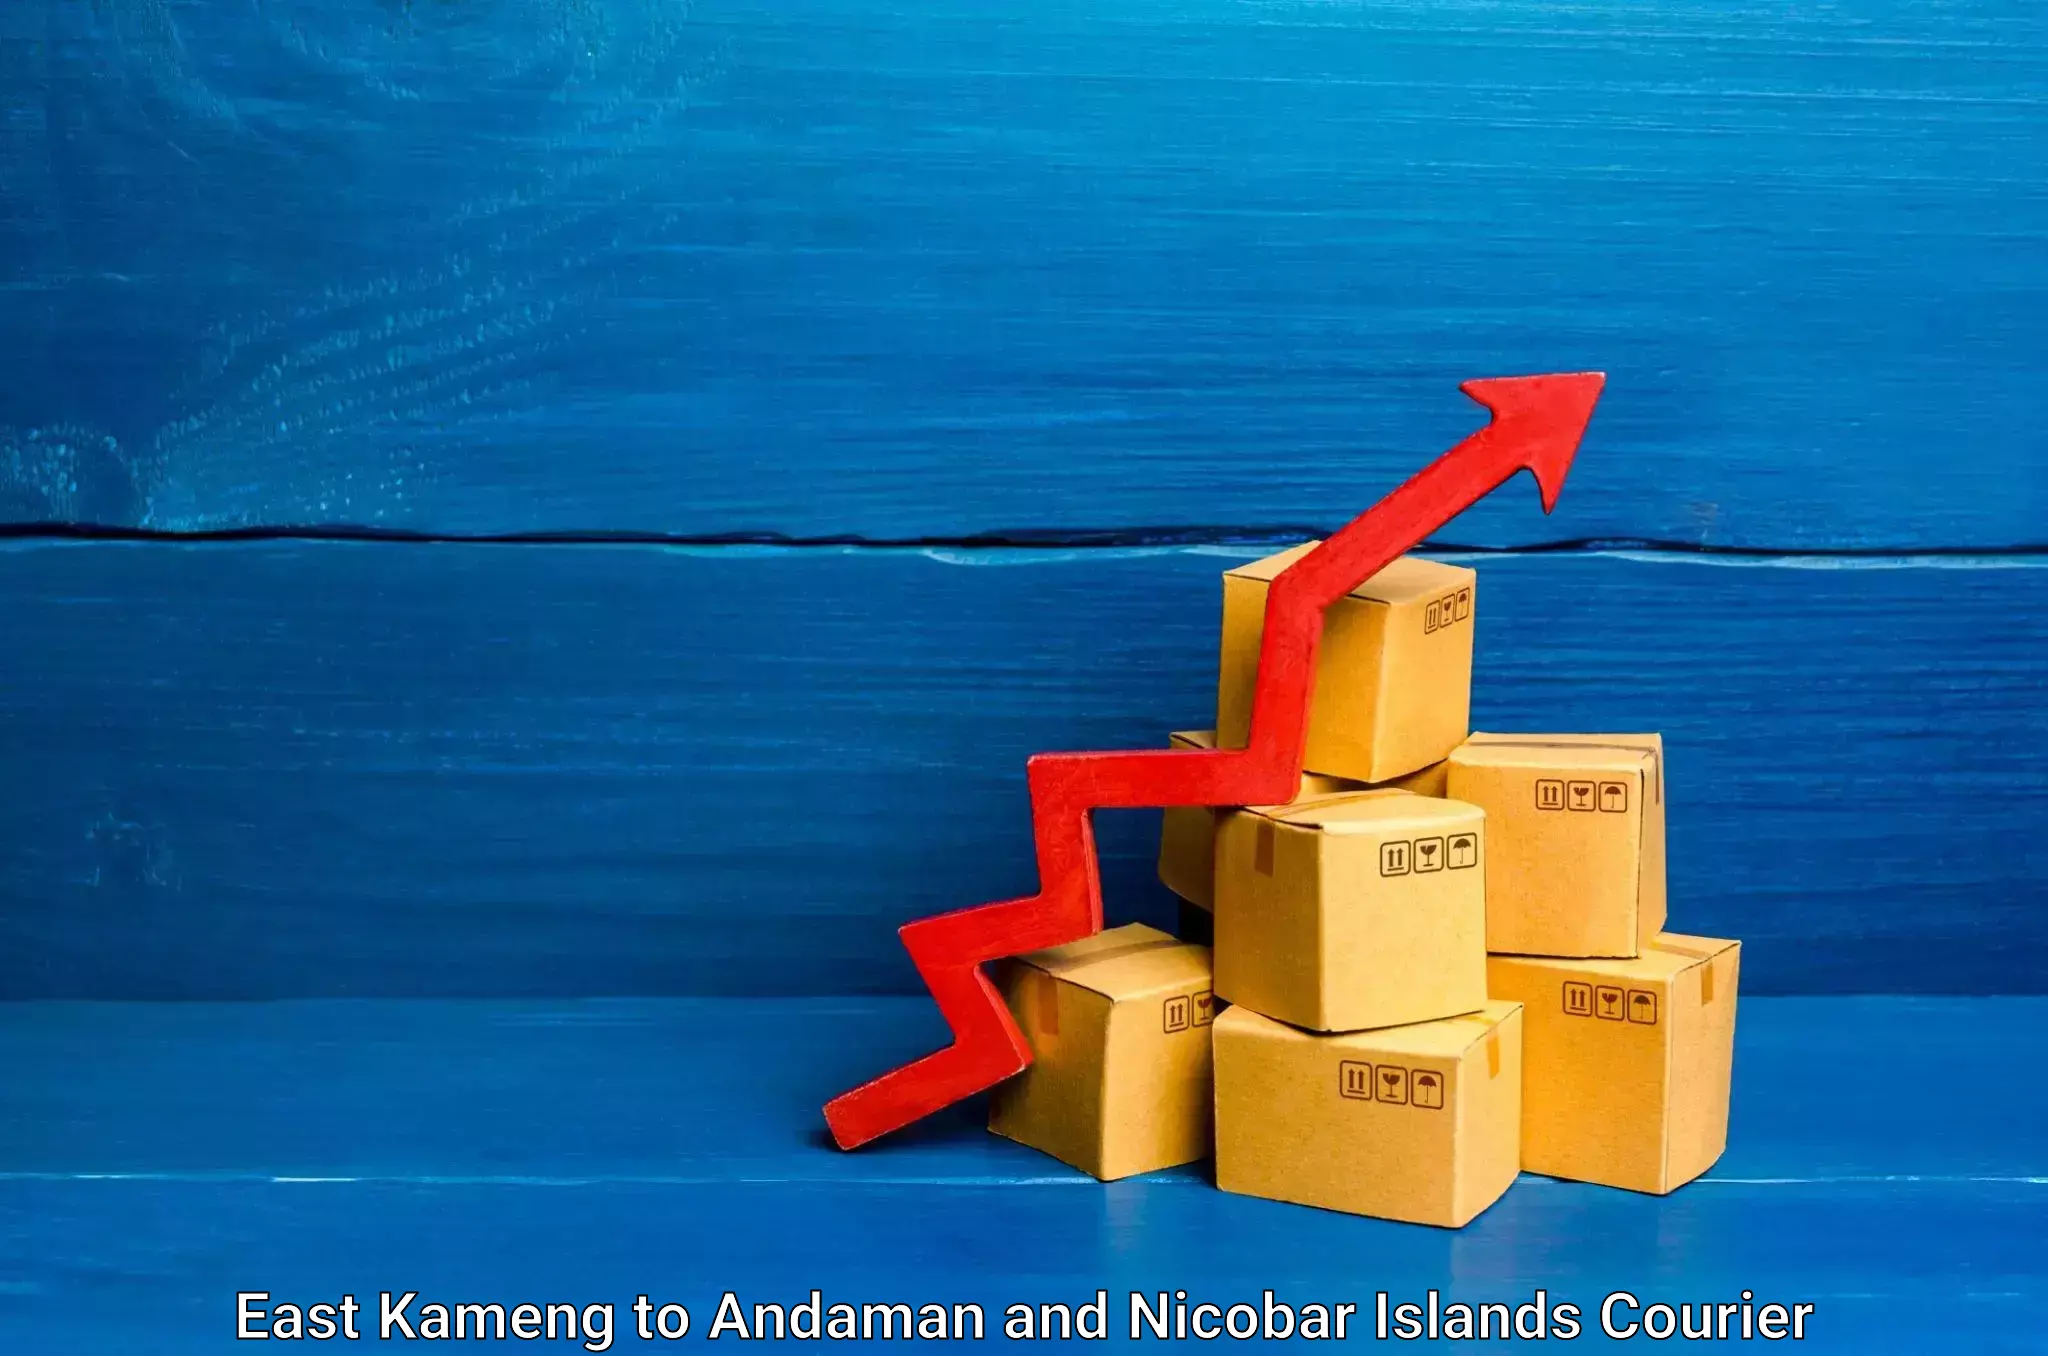 Express package handling East Kameng to Andaman and Nicobar Islands